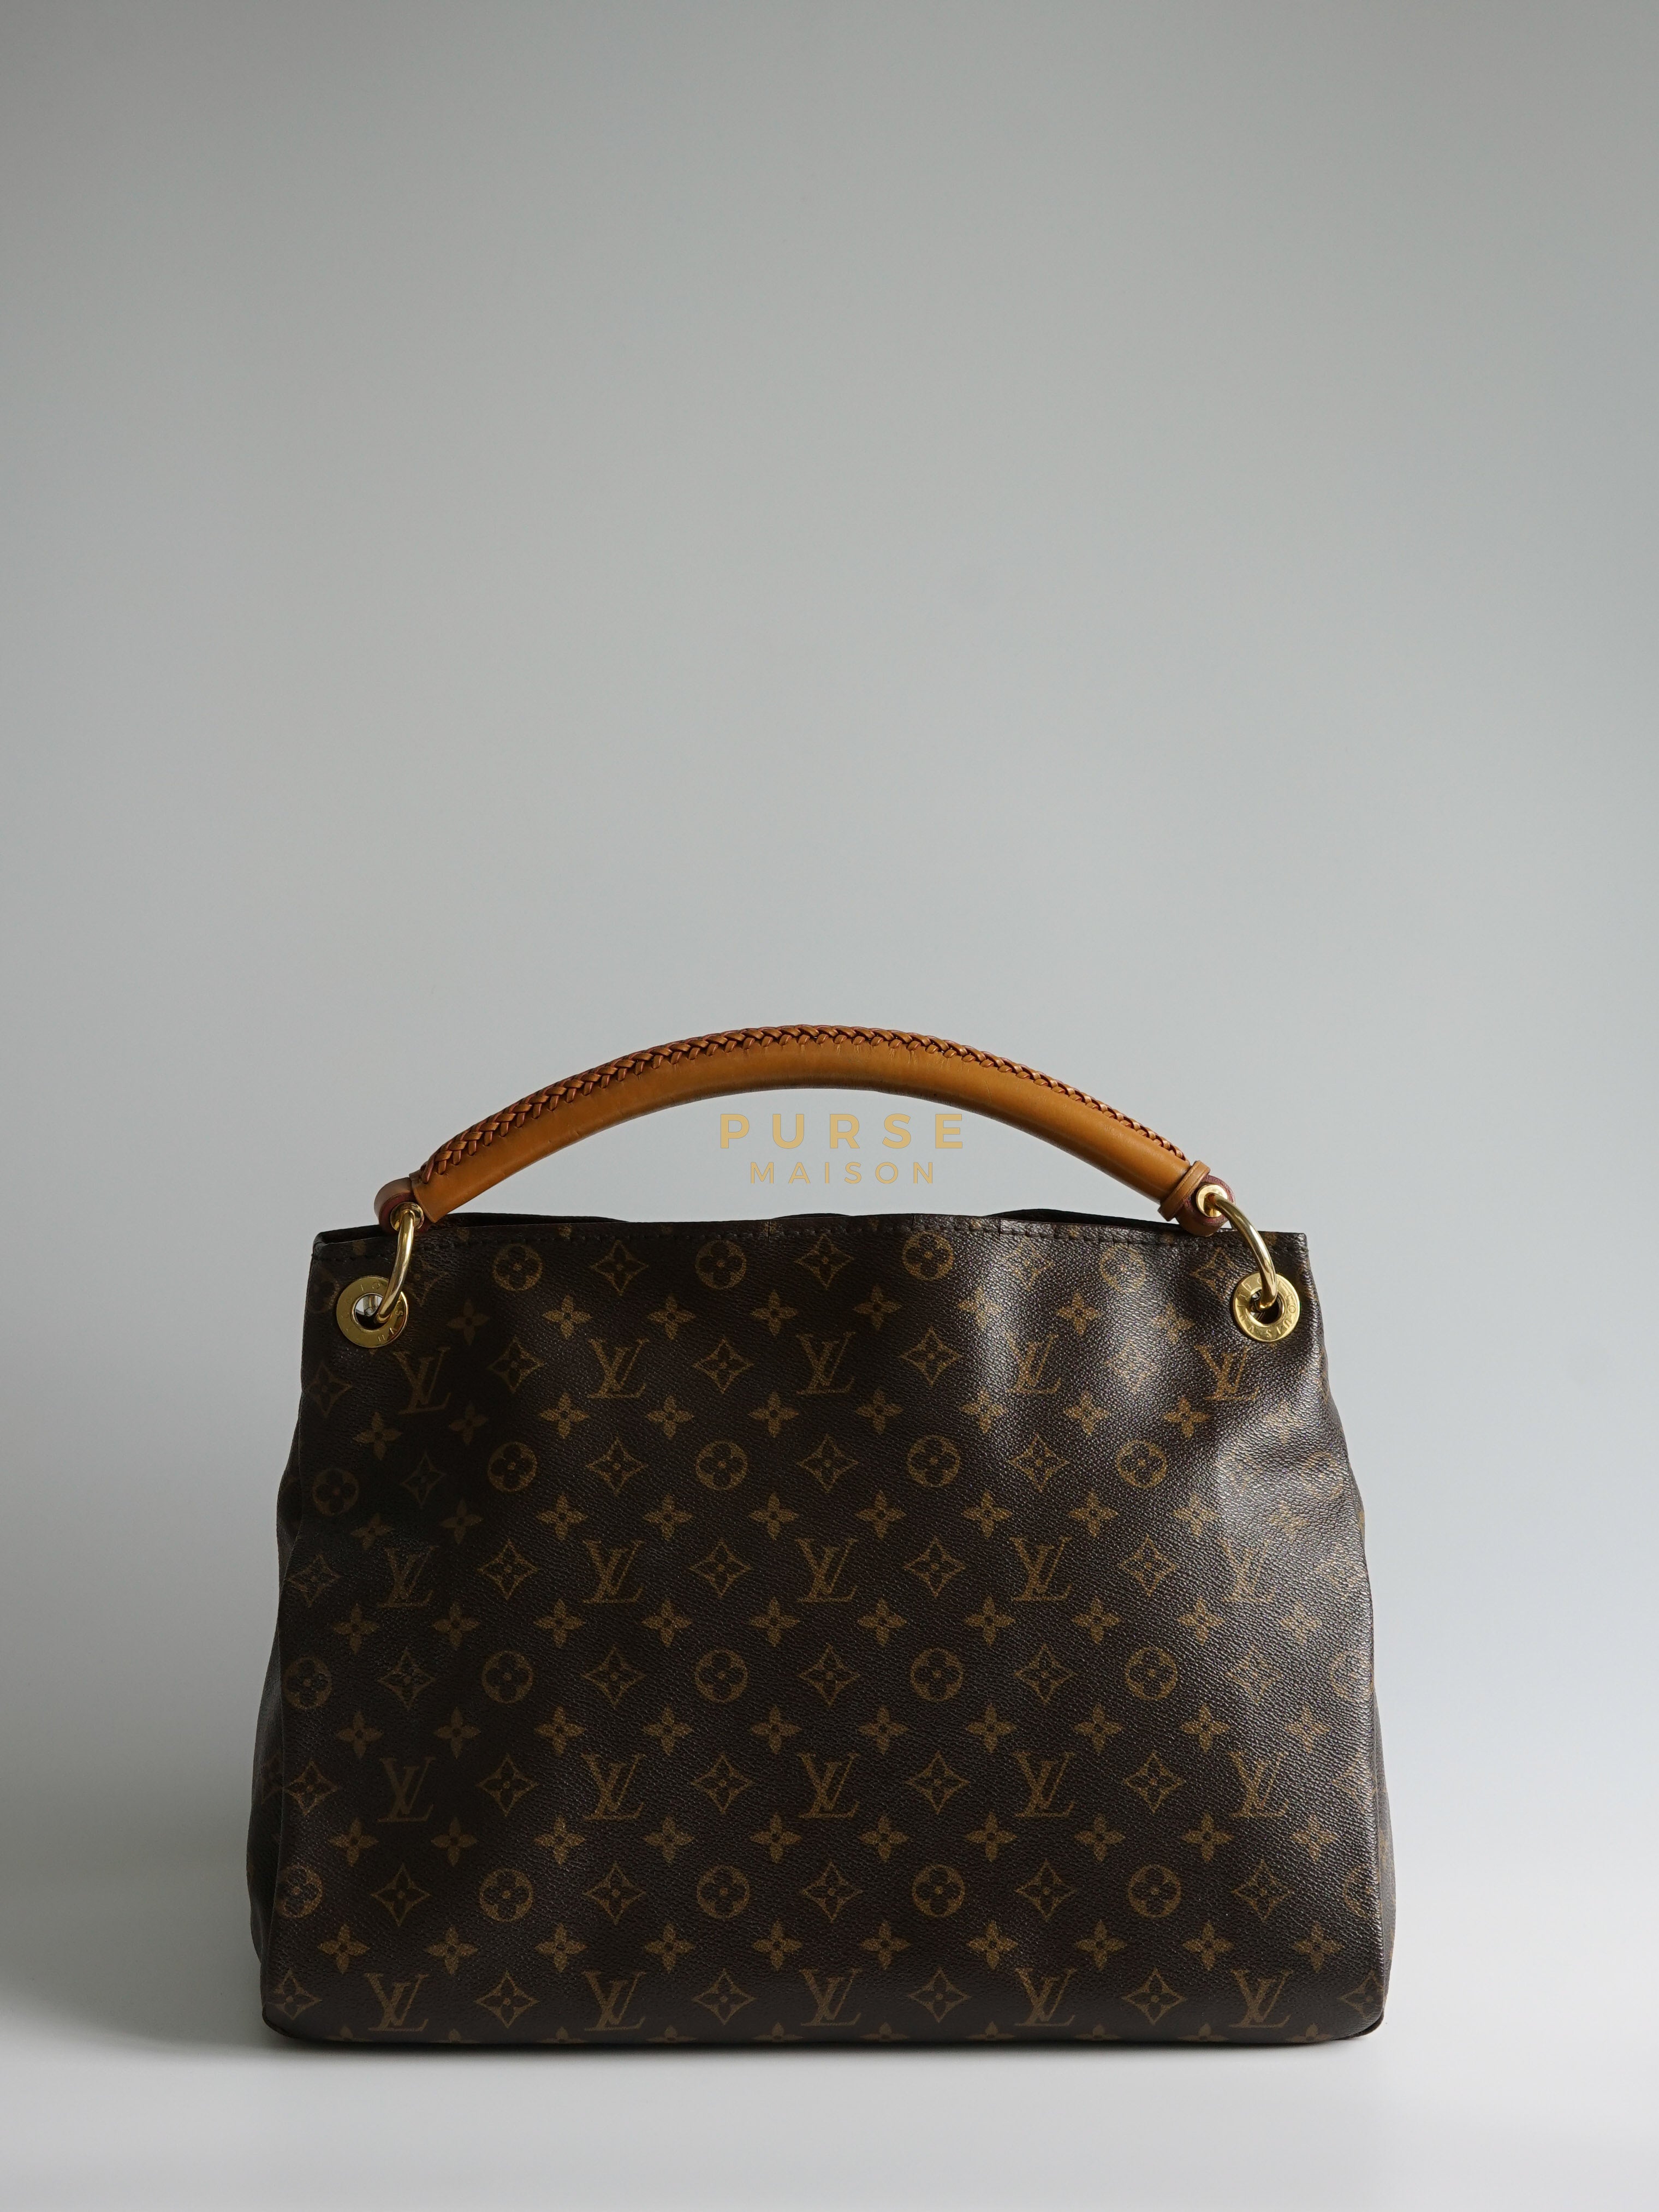 Artsy in Monogram Canvas Tote Bag (Date code: AR0161) | Purse Maison Luxury Bags Shop